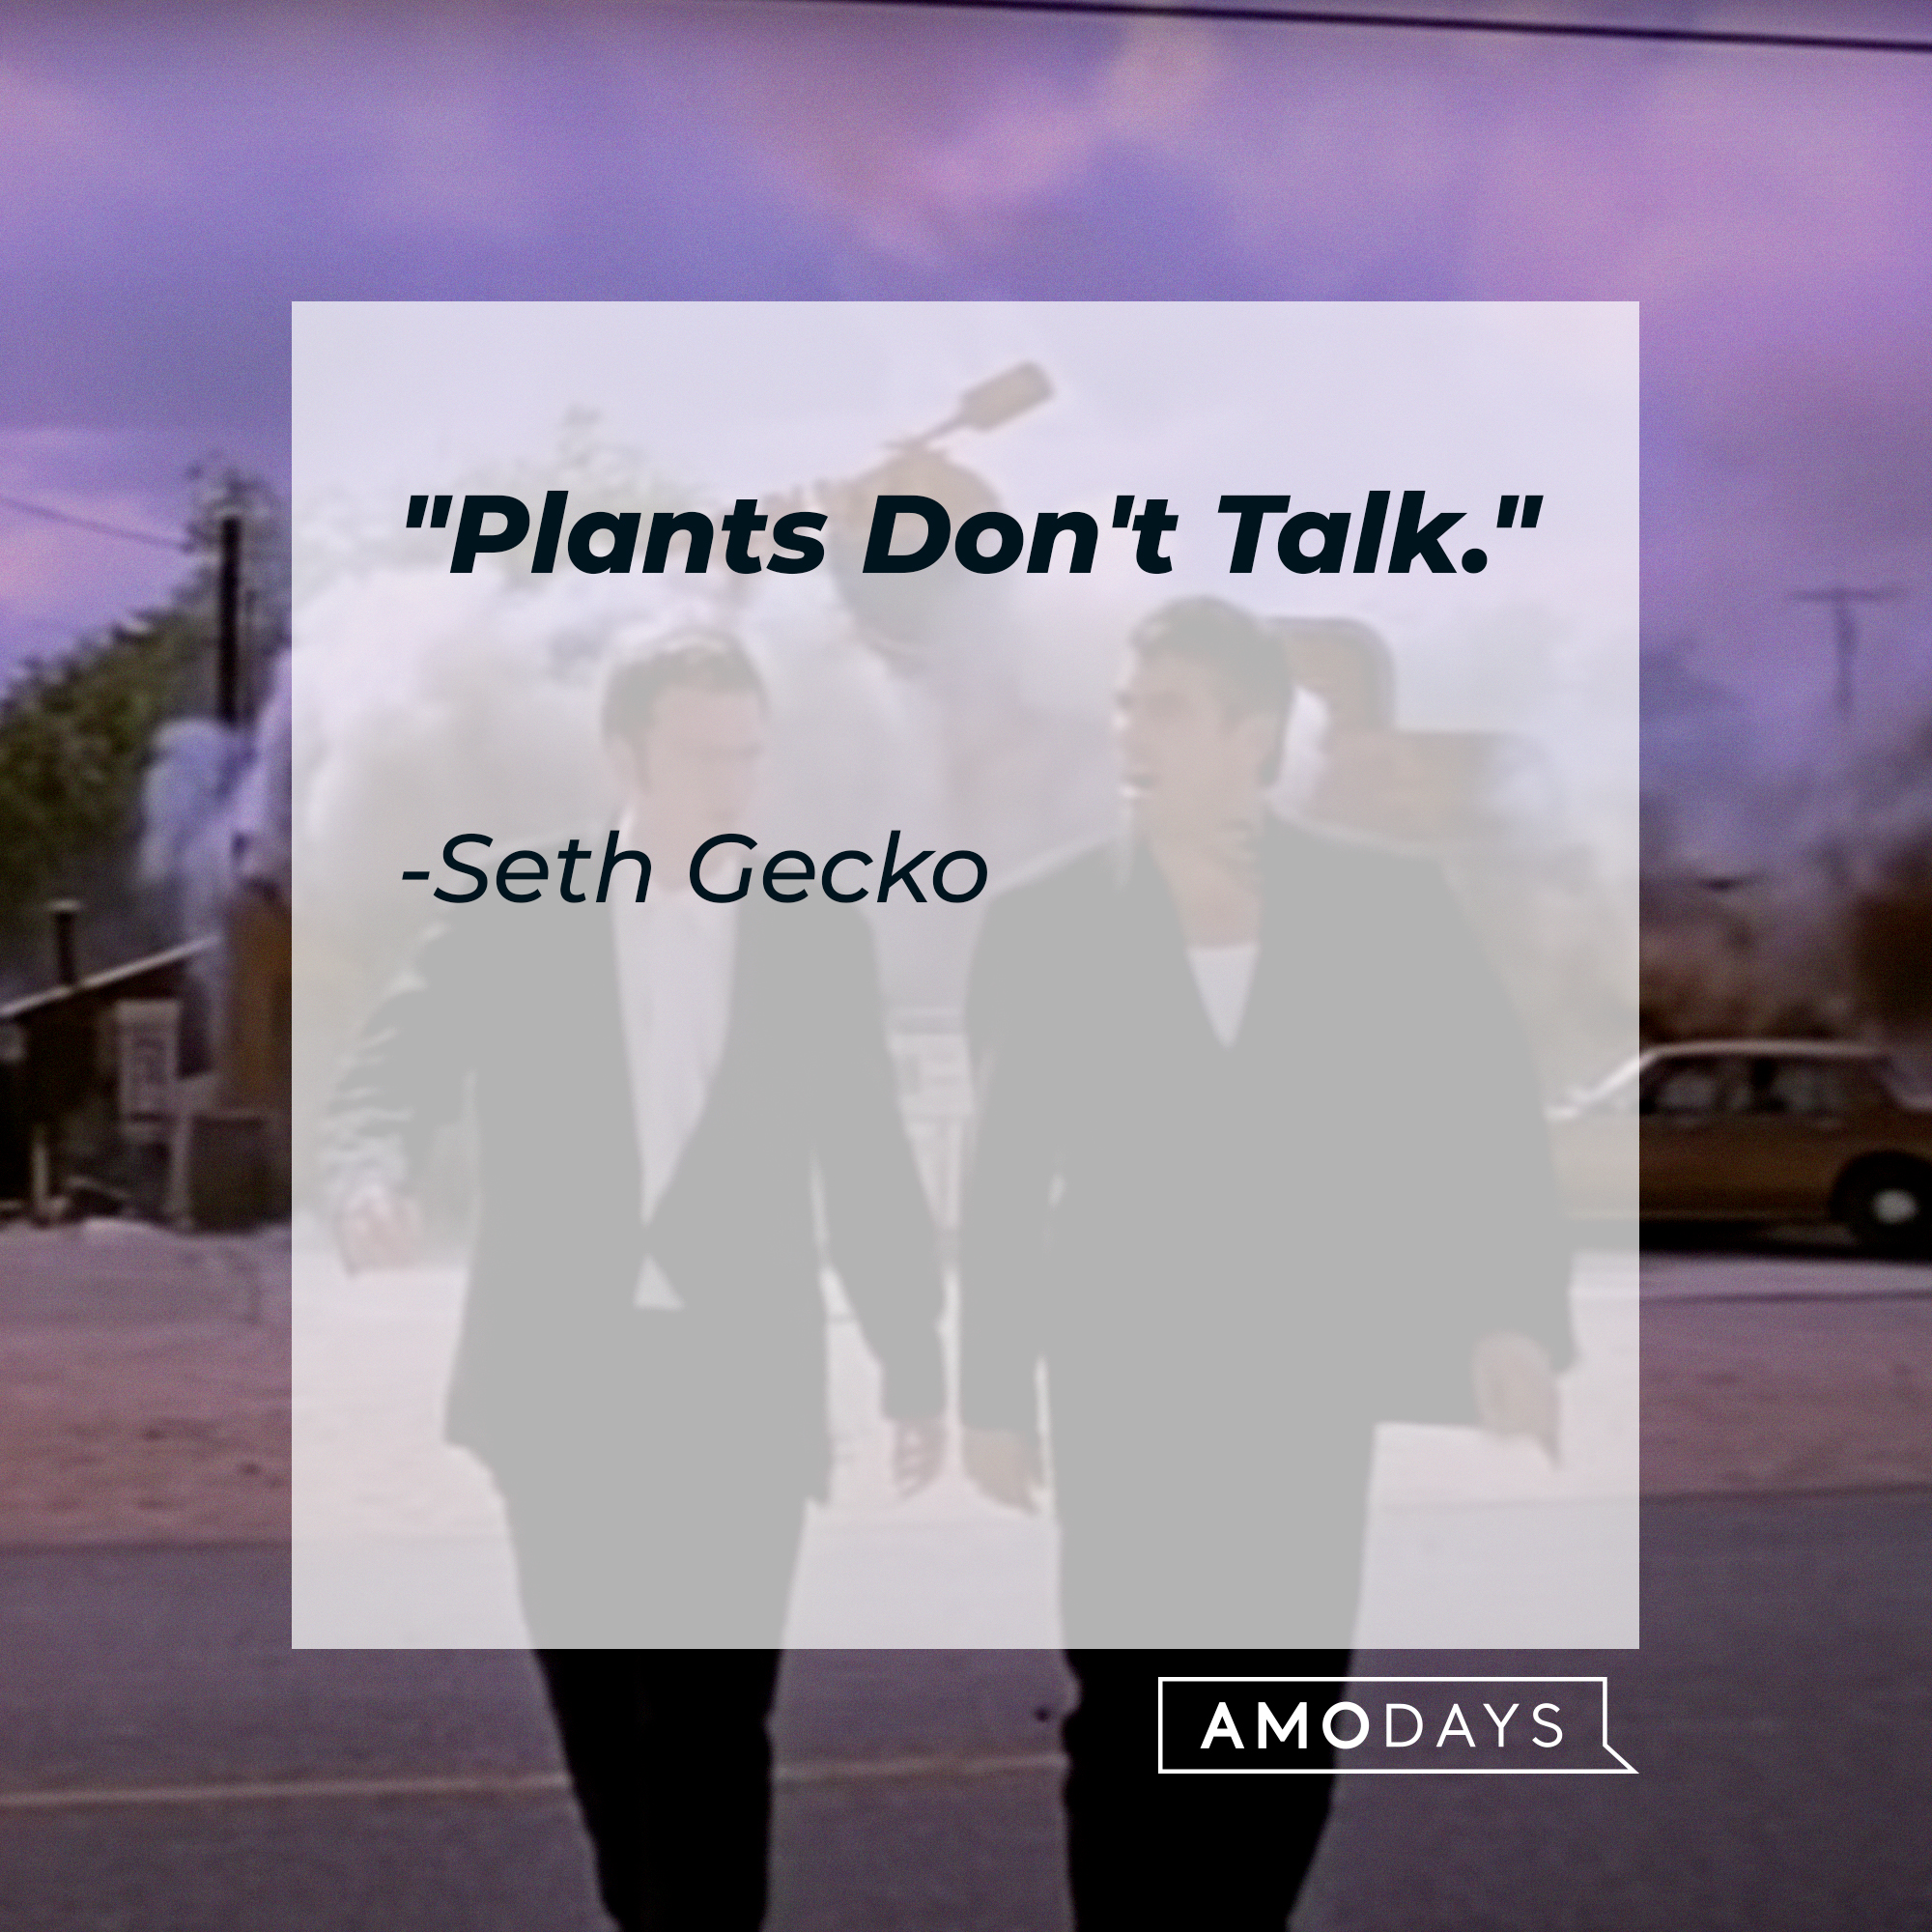 Seth Gecko's quote: "Plants Don't Talk." | Source: youtube.com/miramax